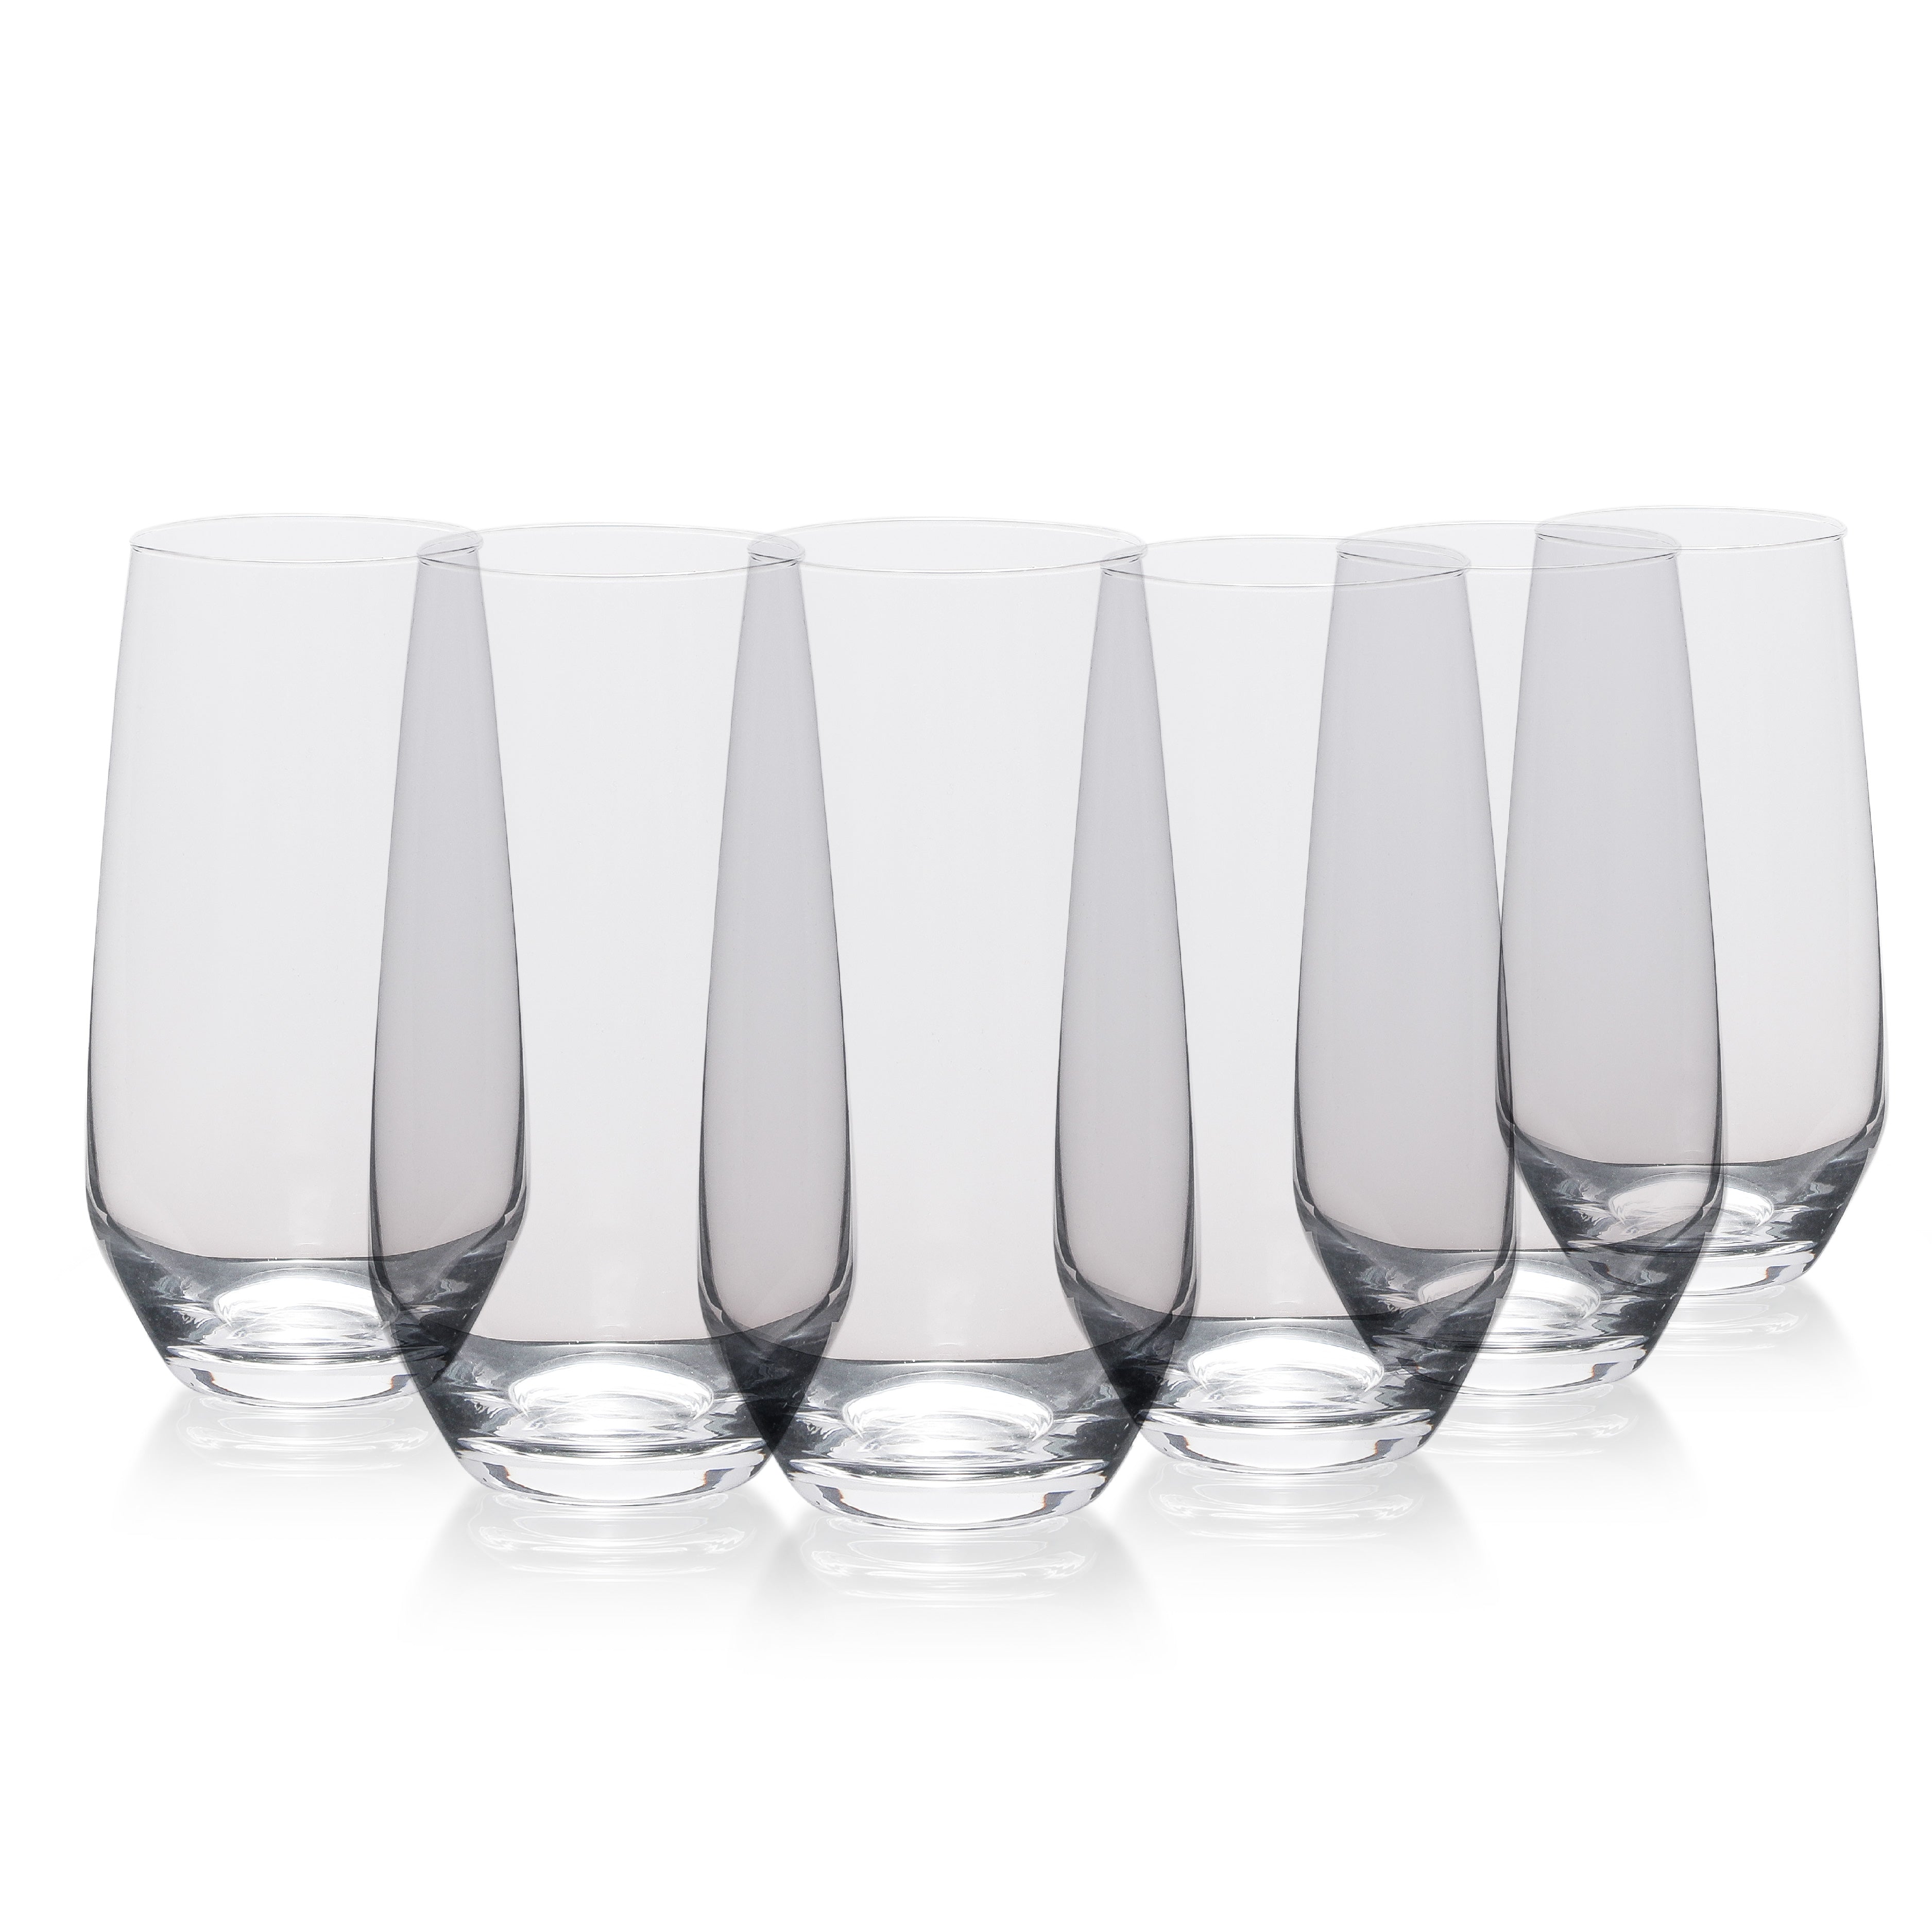 TABLE 12 16.5-Ounce Beverage Glasses, Set of 6, Lead-Free Crystal, Break Resistant